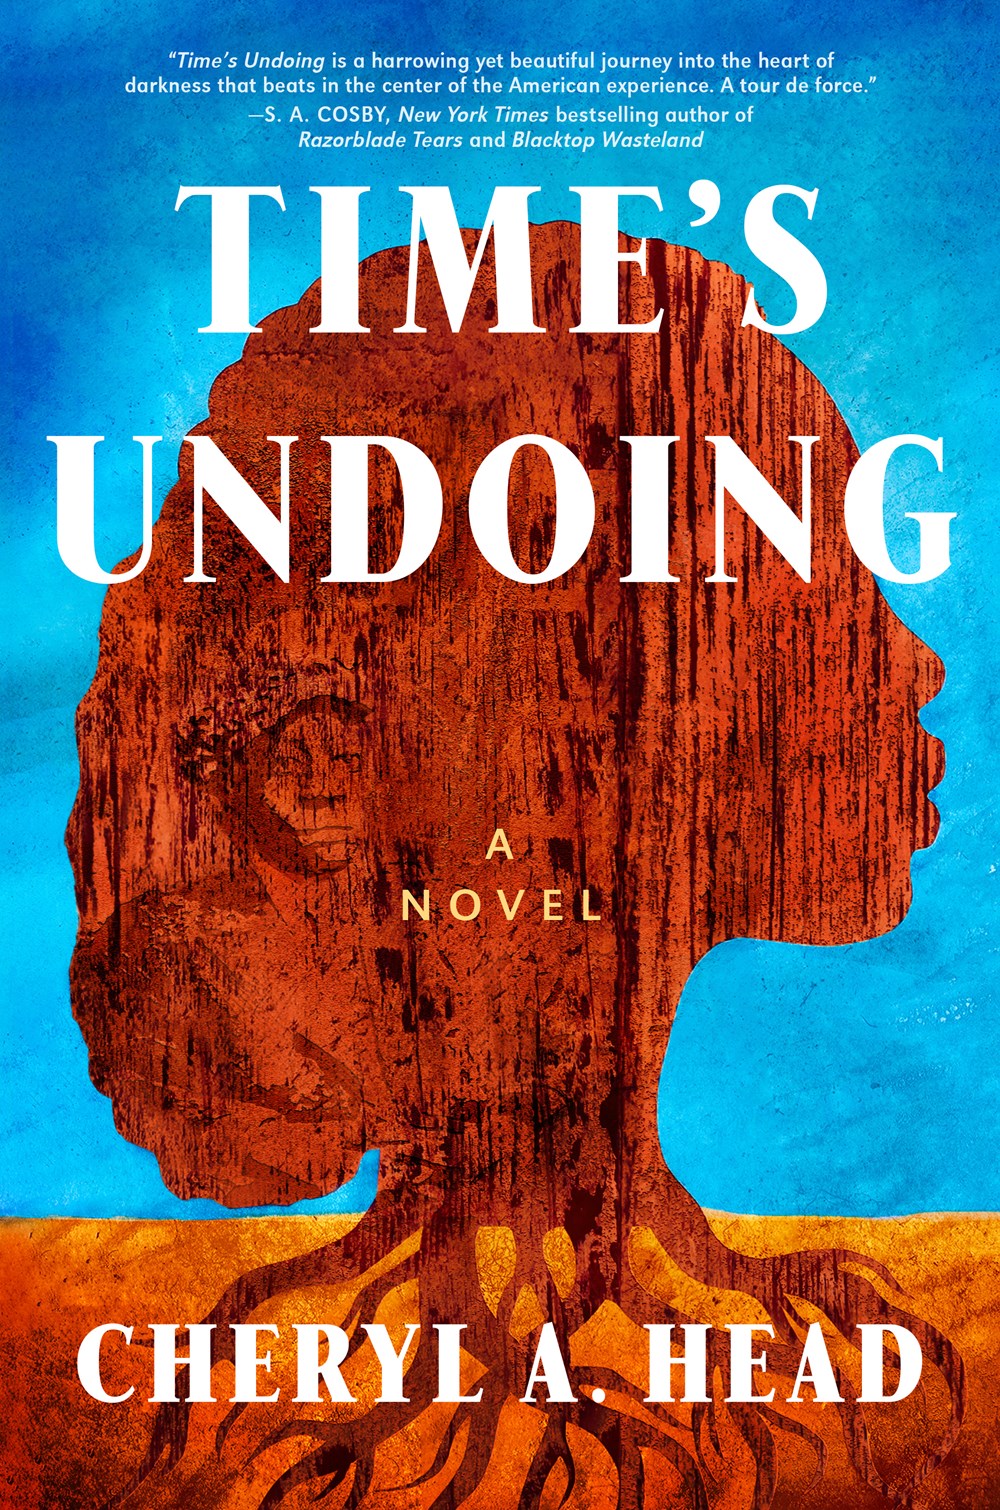 Time's Undoing by Anne Wynter